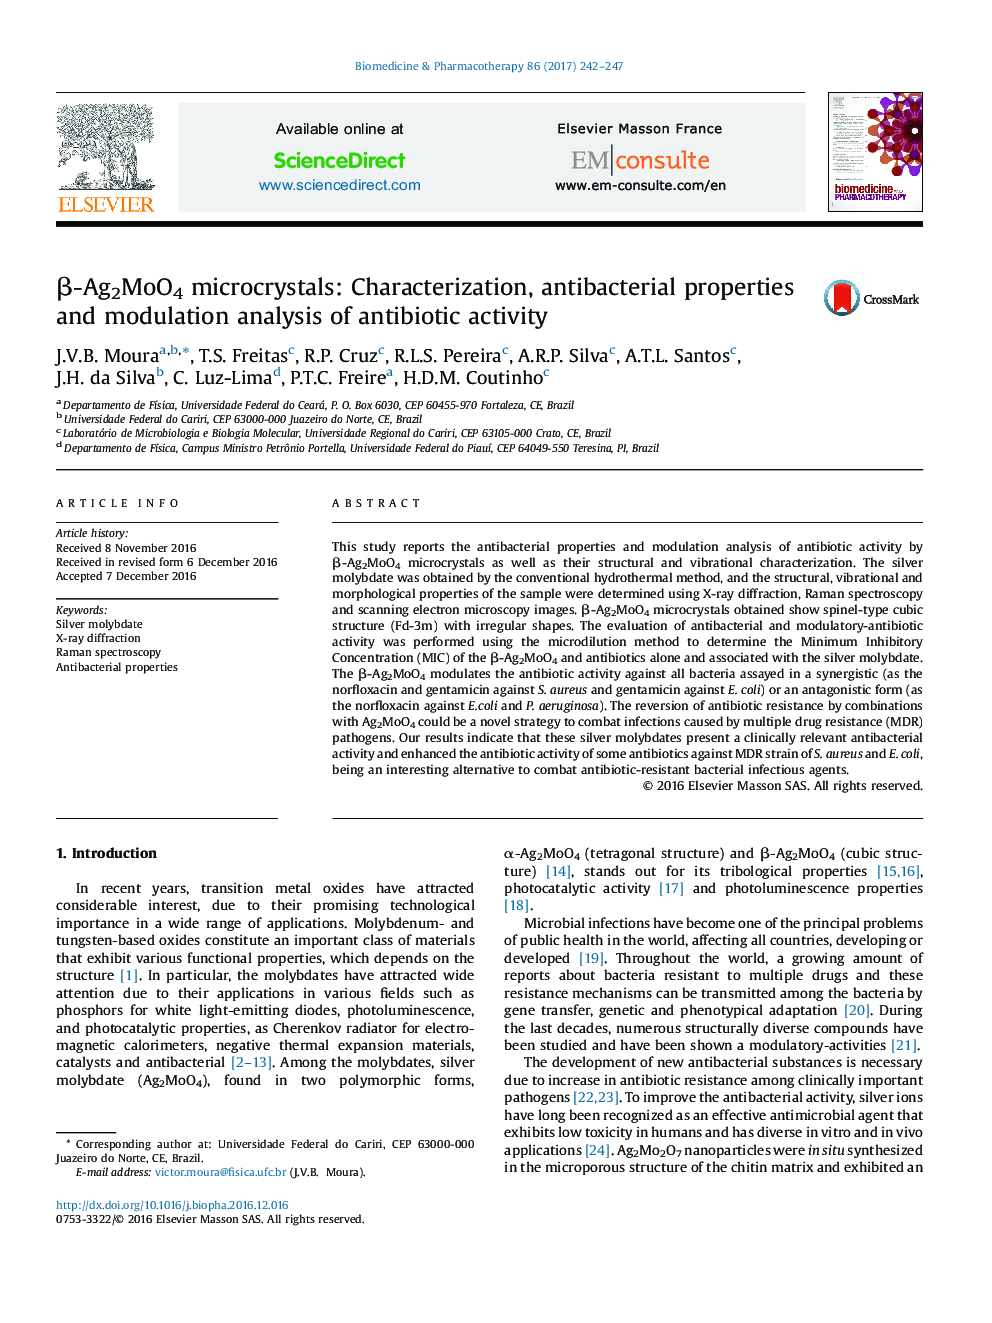 Î²-Ag2MoO4 microcrystals: Characterization, antibacterial properties and modulation analysis of antibiotic activity